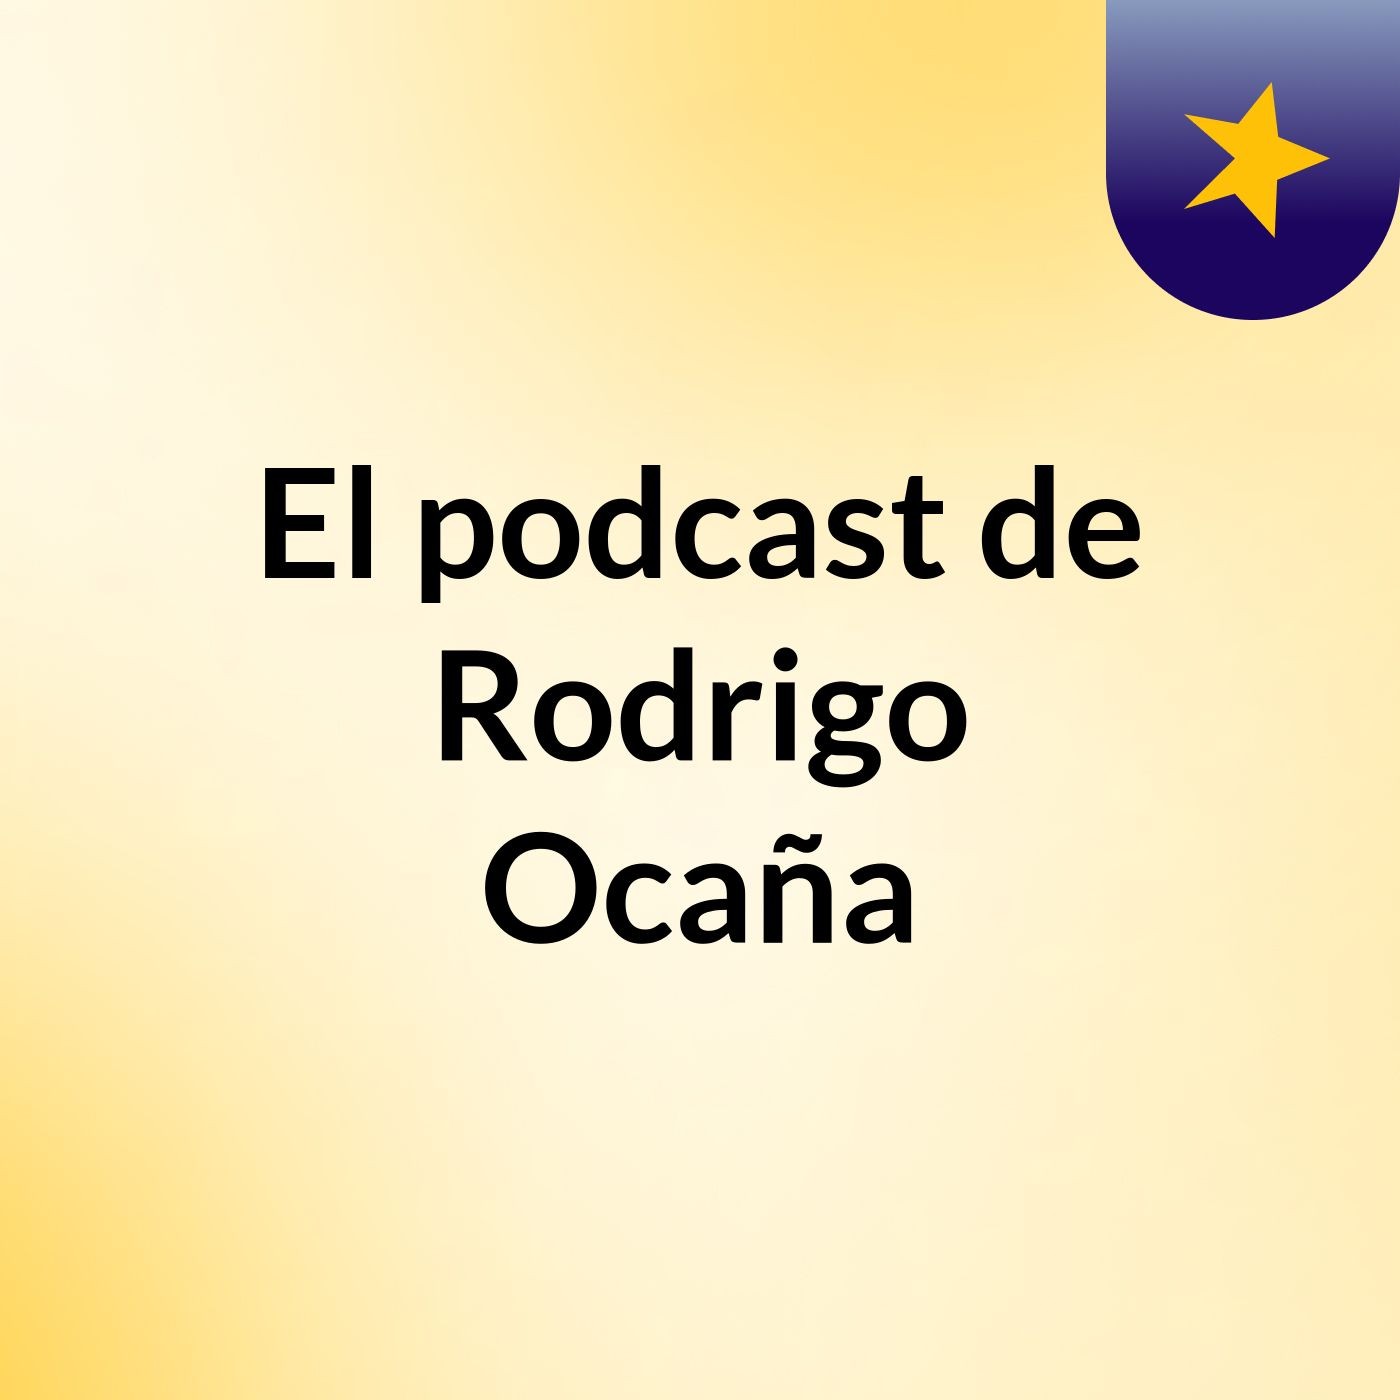 El podcast de Rodrigo Ocaña